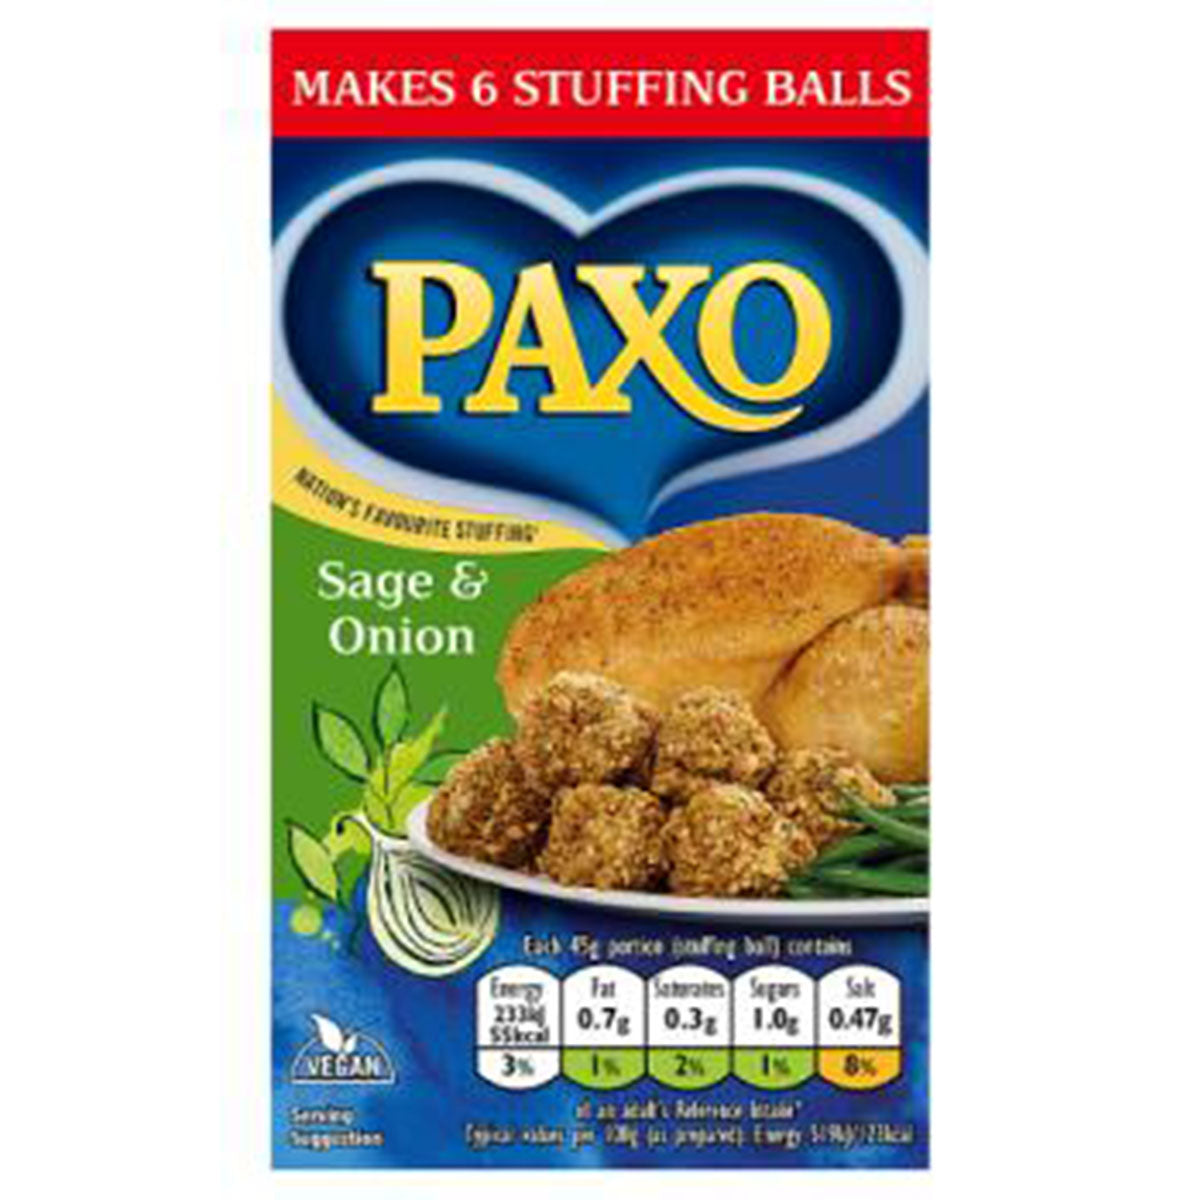 Paxo - Sage & Onion Stuffing Mix - 85g - Continental Food Store